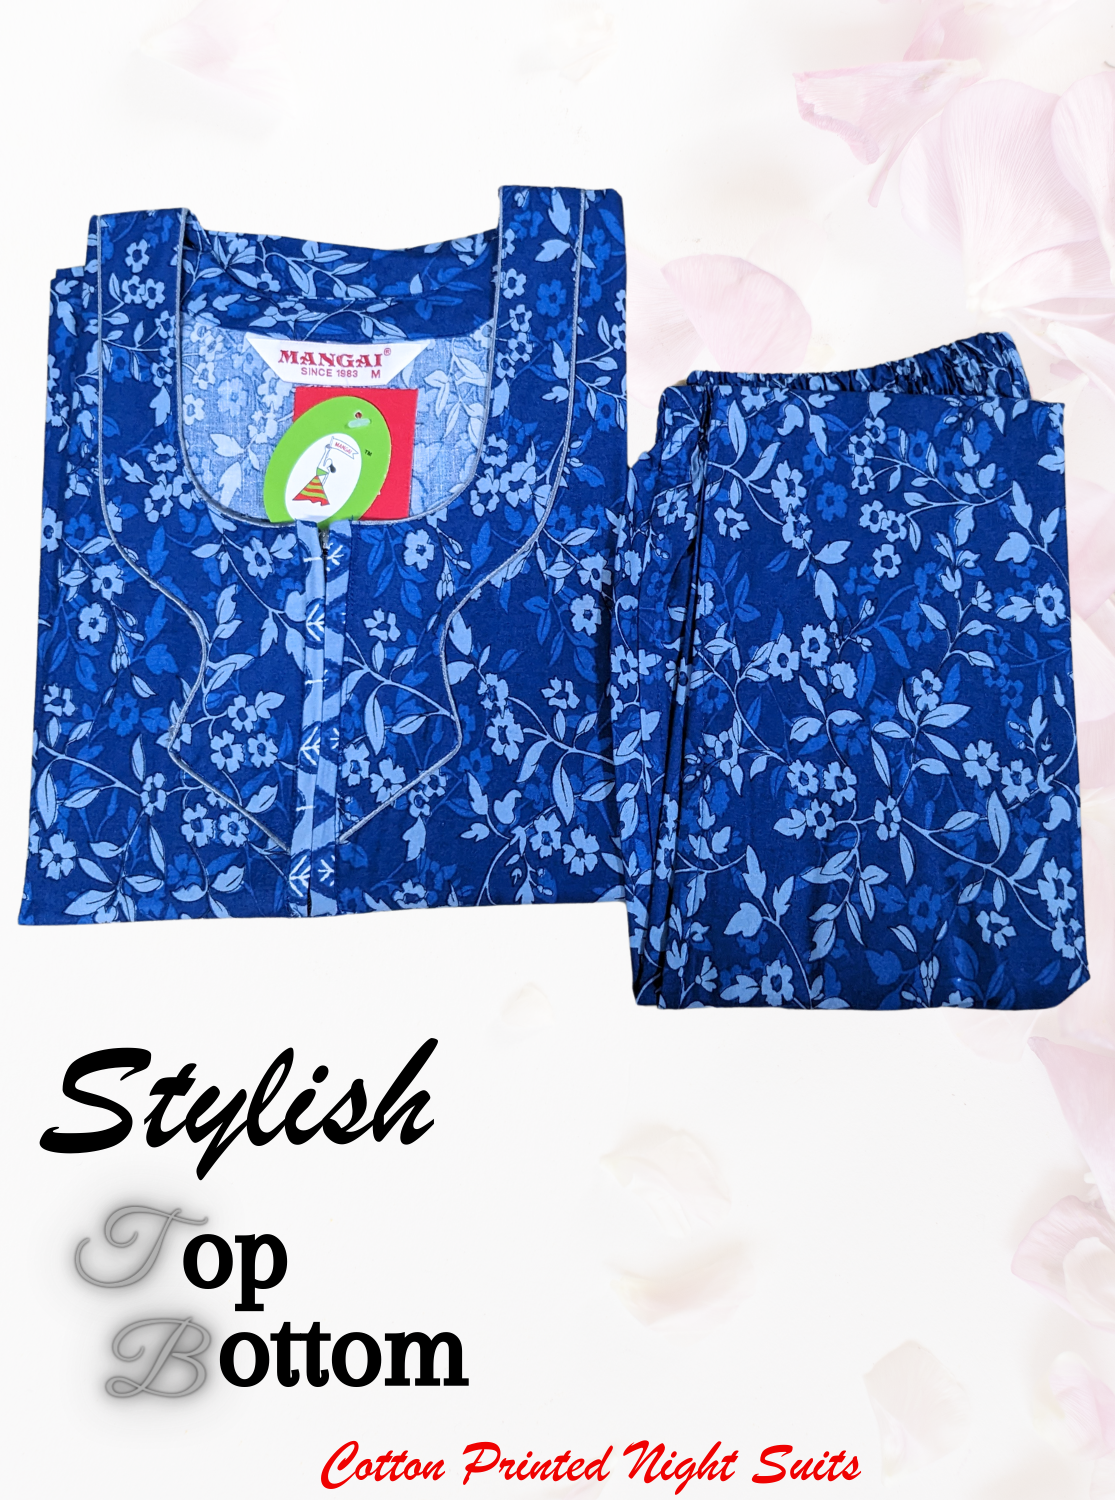 MANGAI New Premium Cotton Printed Stylish Night Suits- Stylish Printed Top & Bottom Set for Trendy Women's